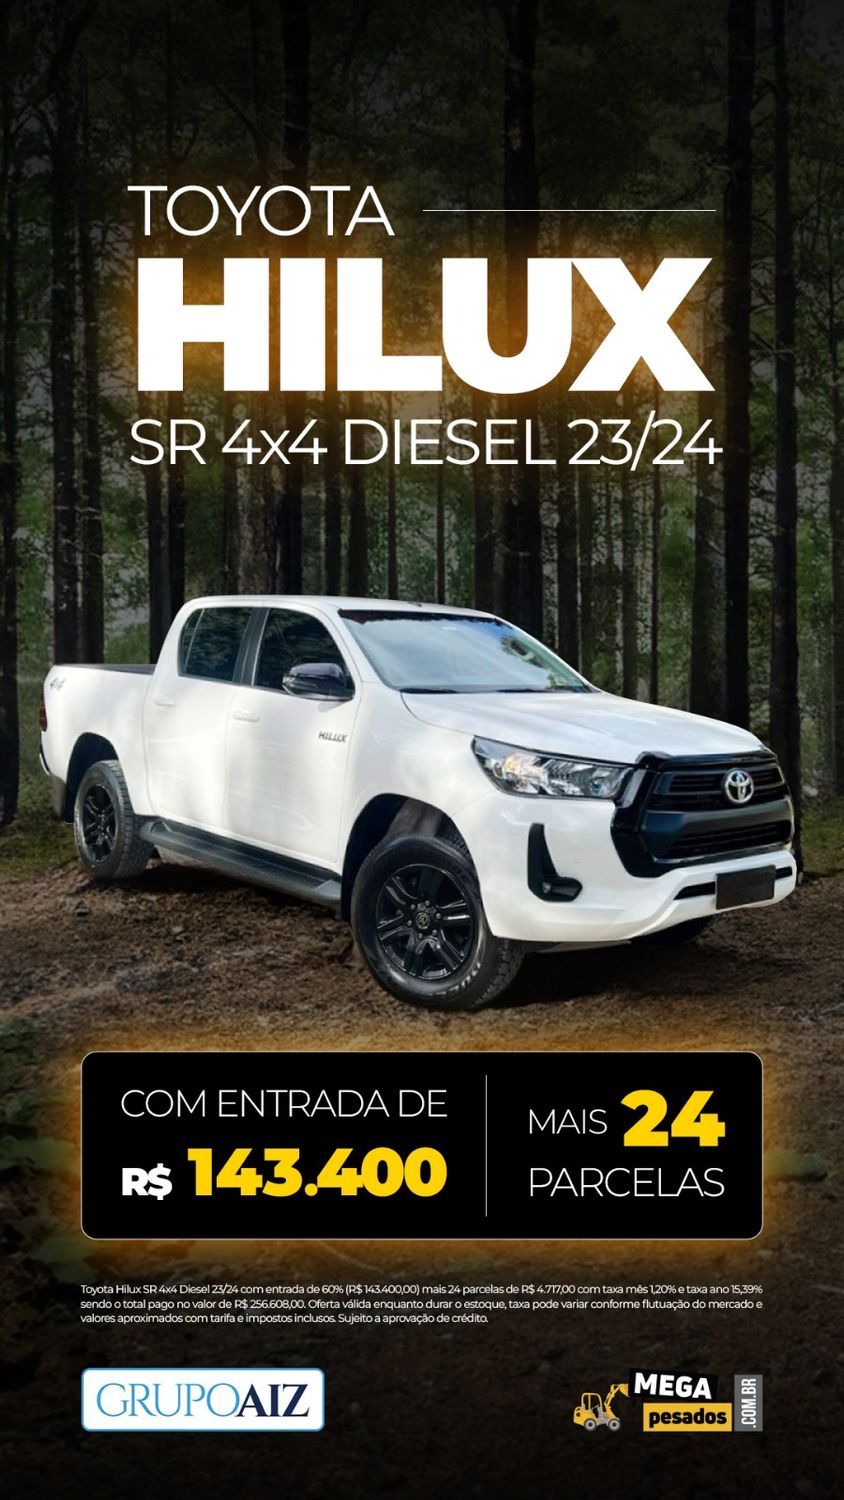 Toyota Hilux SR 4x4 Diesel 23/24